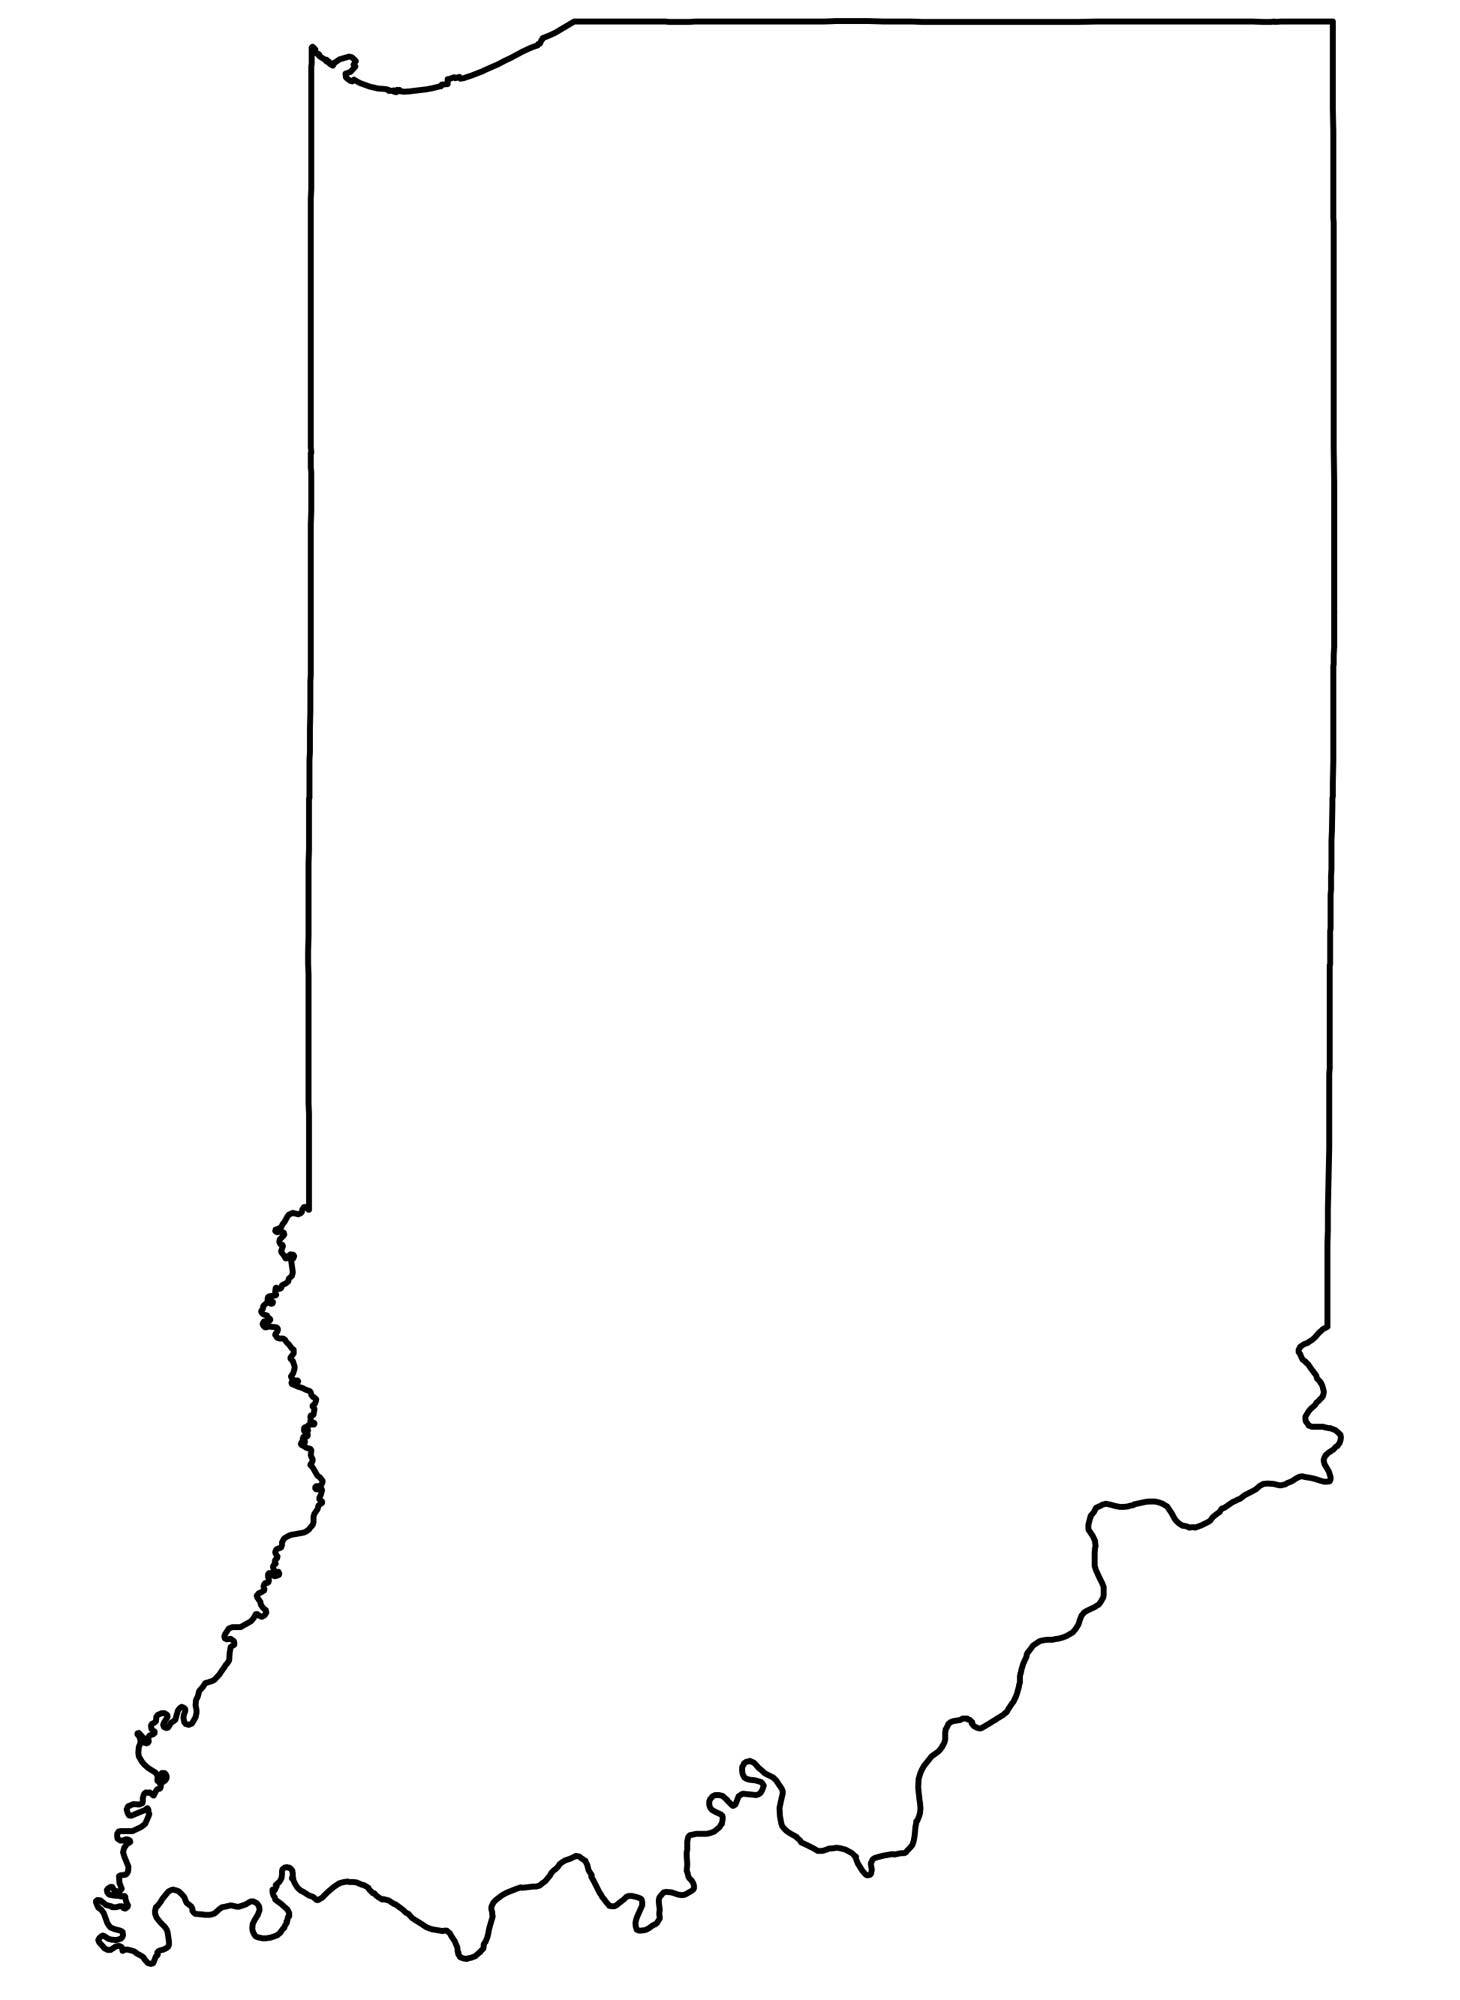 Indiana-Outline-Map.jpg